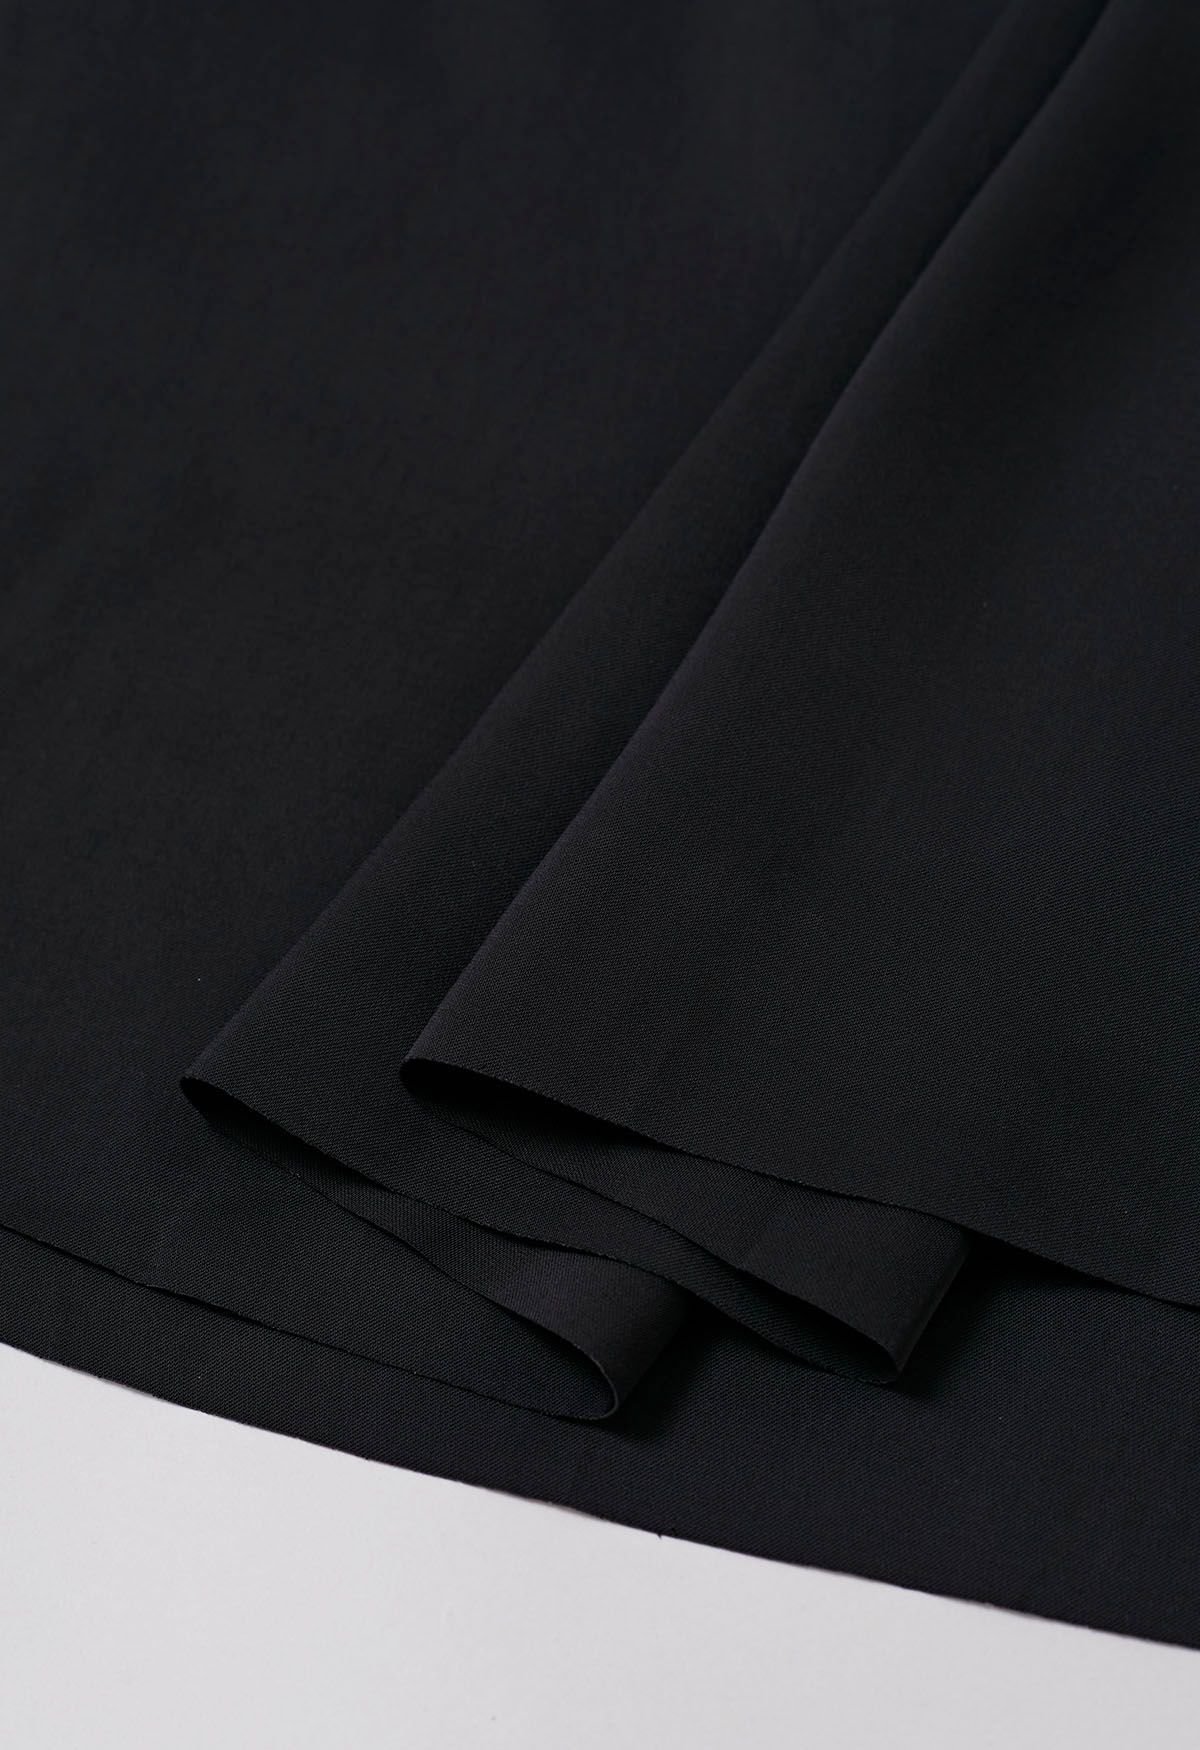 Smooth Satin Pleated Midi Skirt in Black